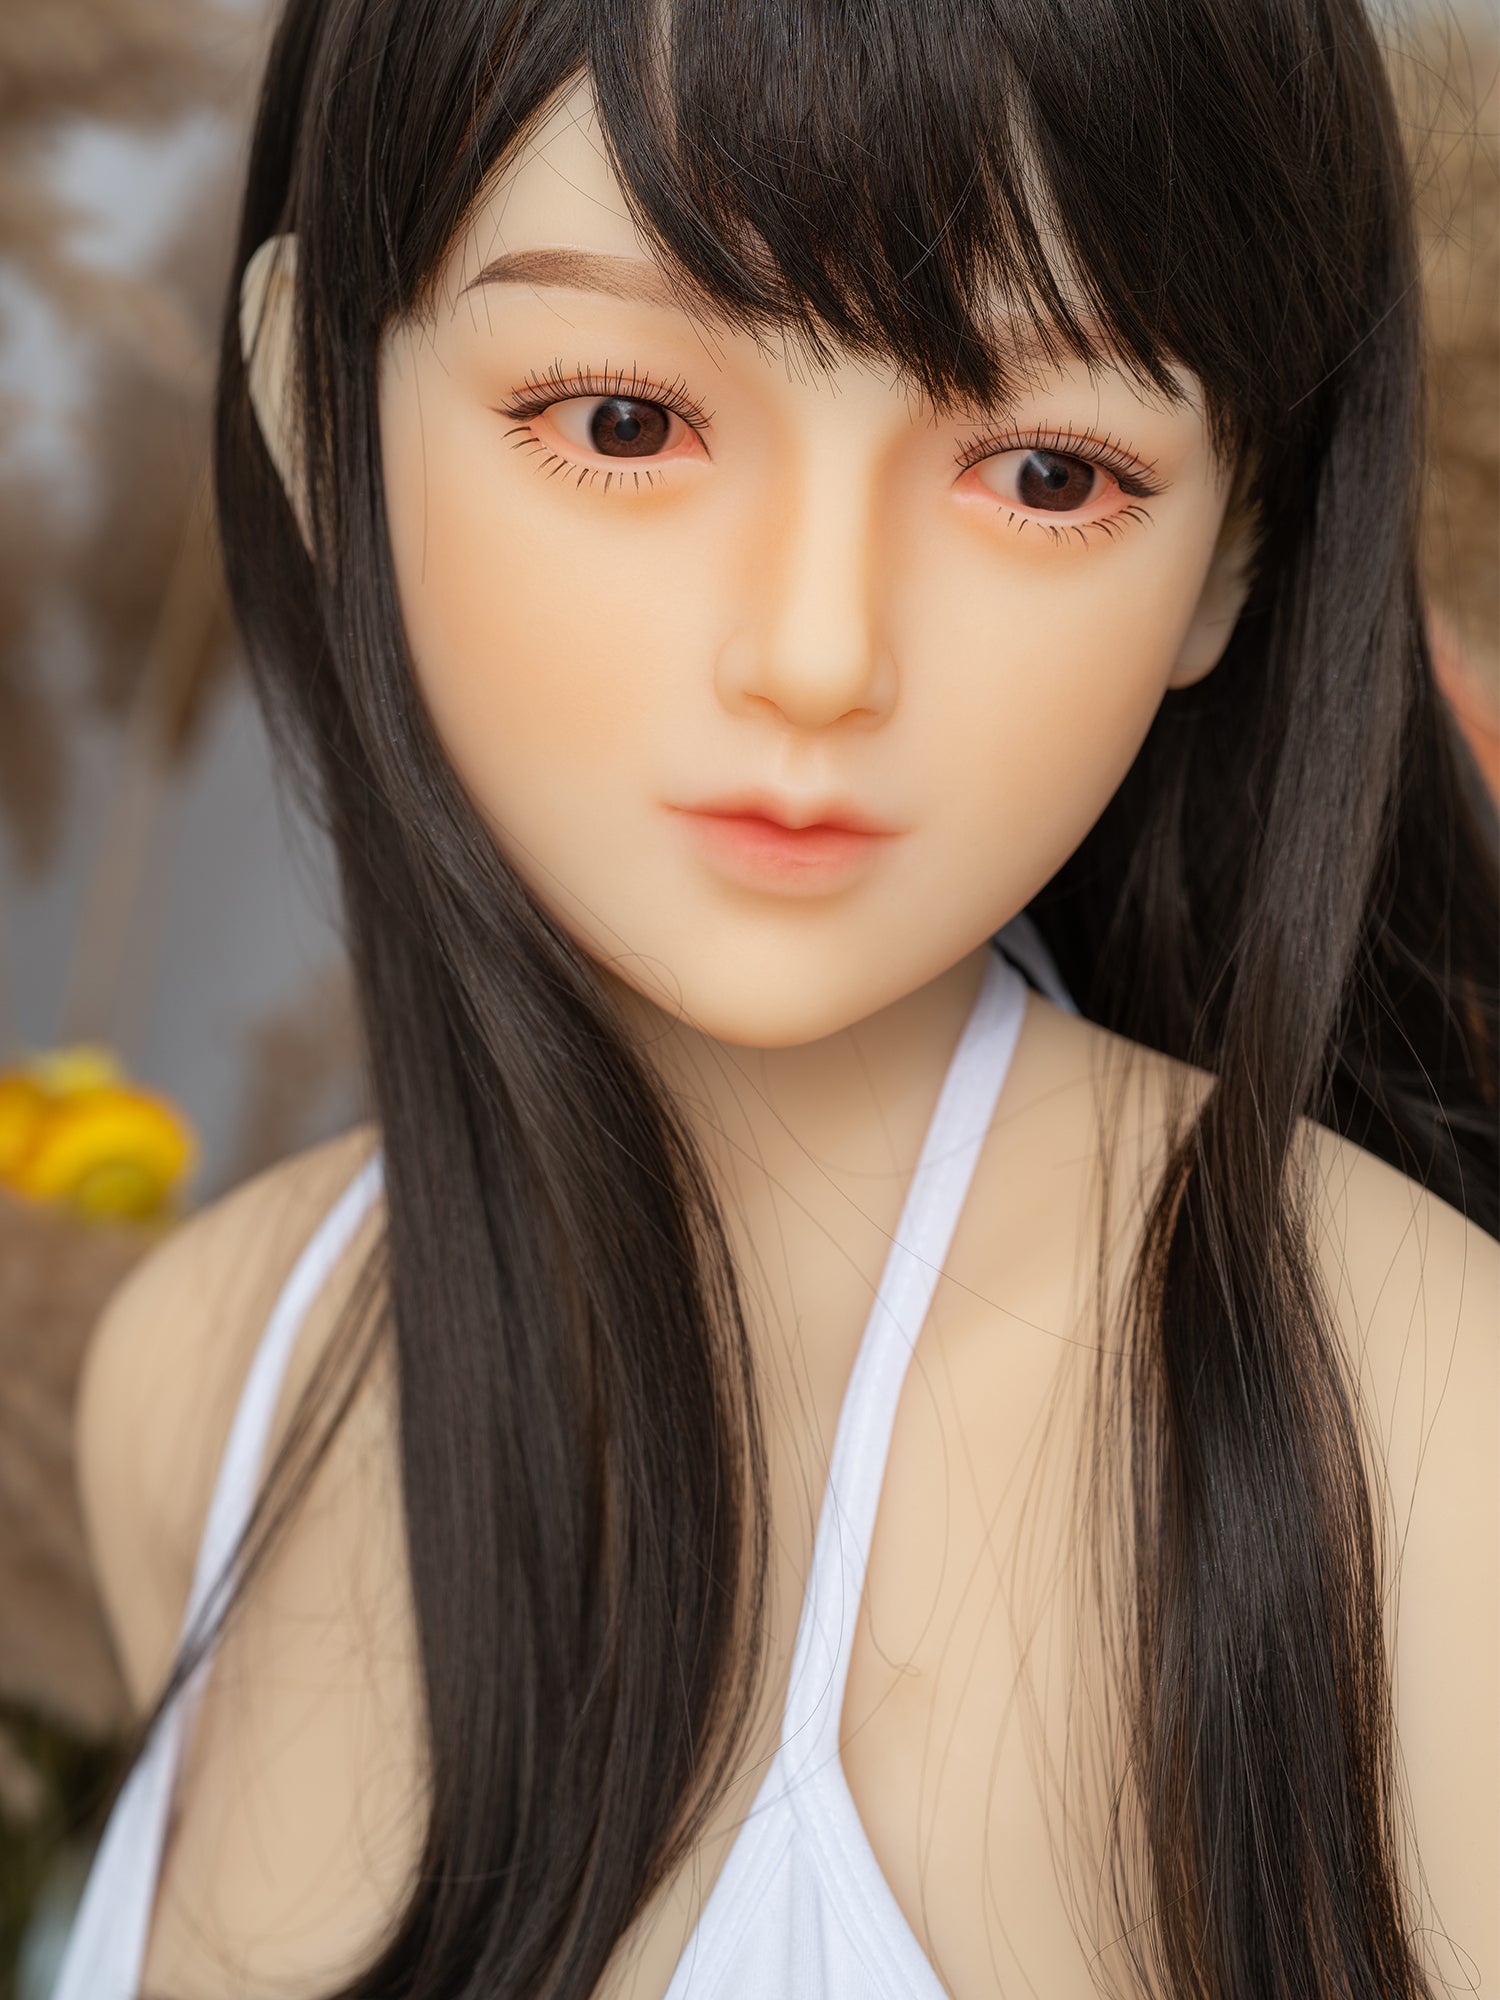 160cm Realistic Asian Love Doll - Rini